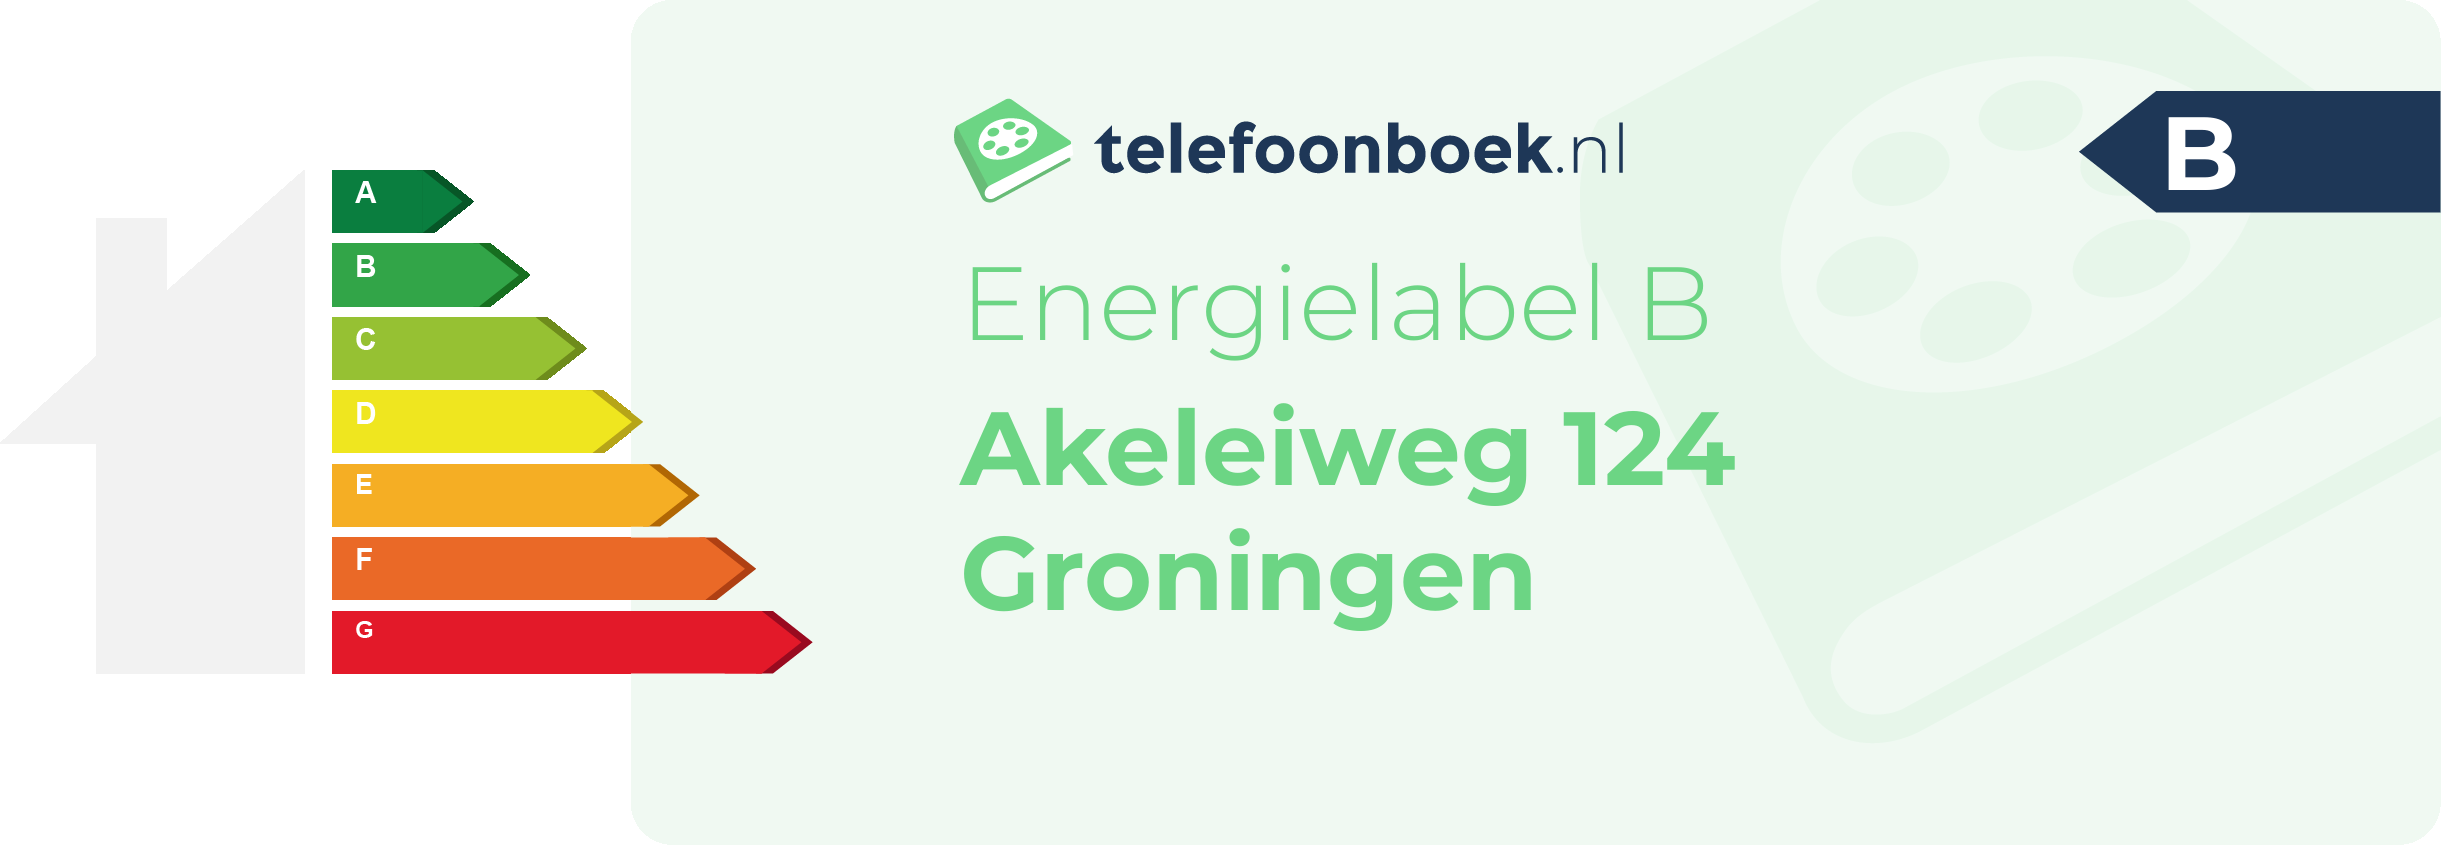 Energielabel Akeleiweg 124 Groningen